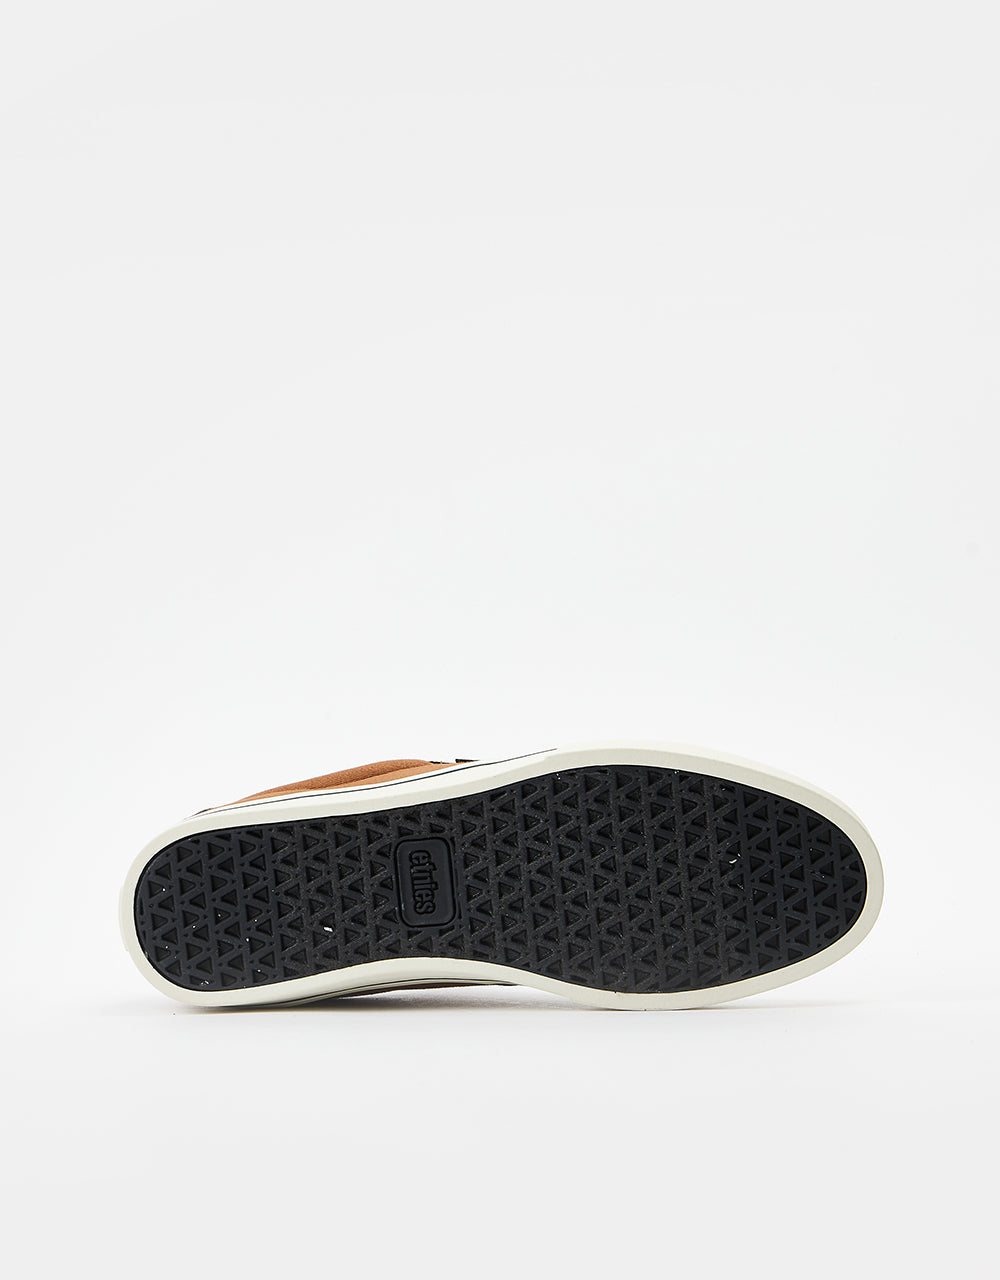 Etnies Jameson 2 Eco Skate Shoes - Black/Tan/Orange